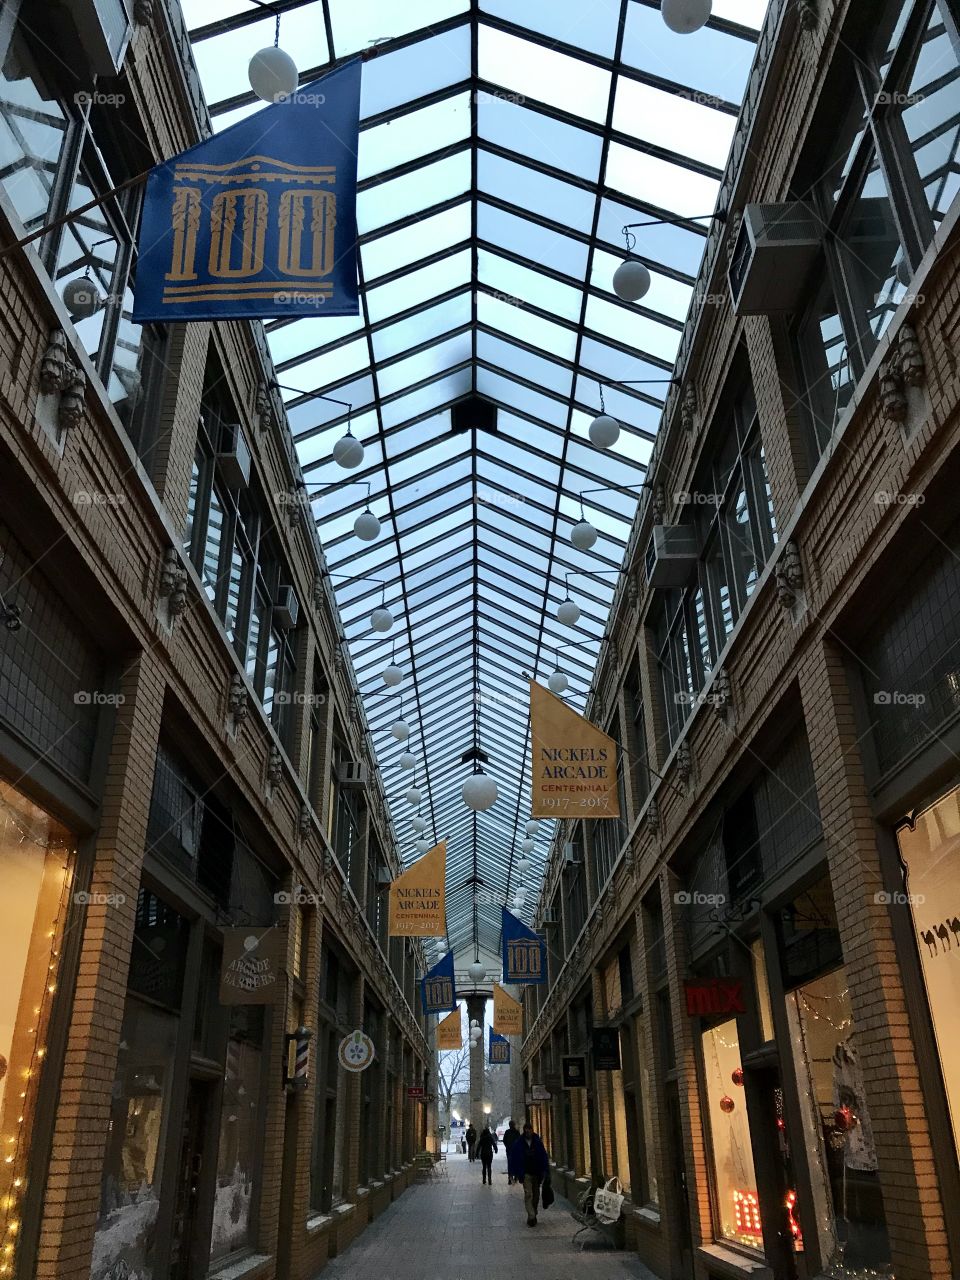 Nickels arcade historical shopping mall in Ann Arbor Michigan 